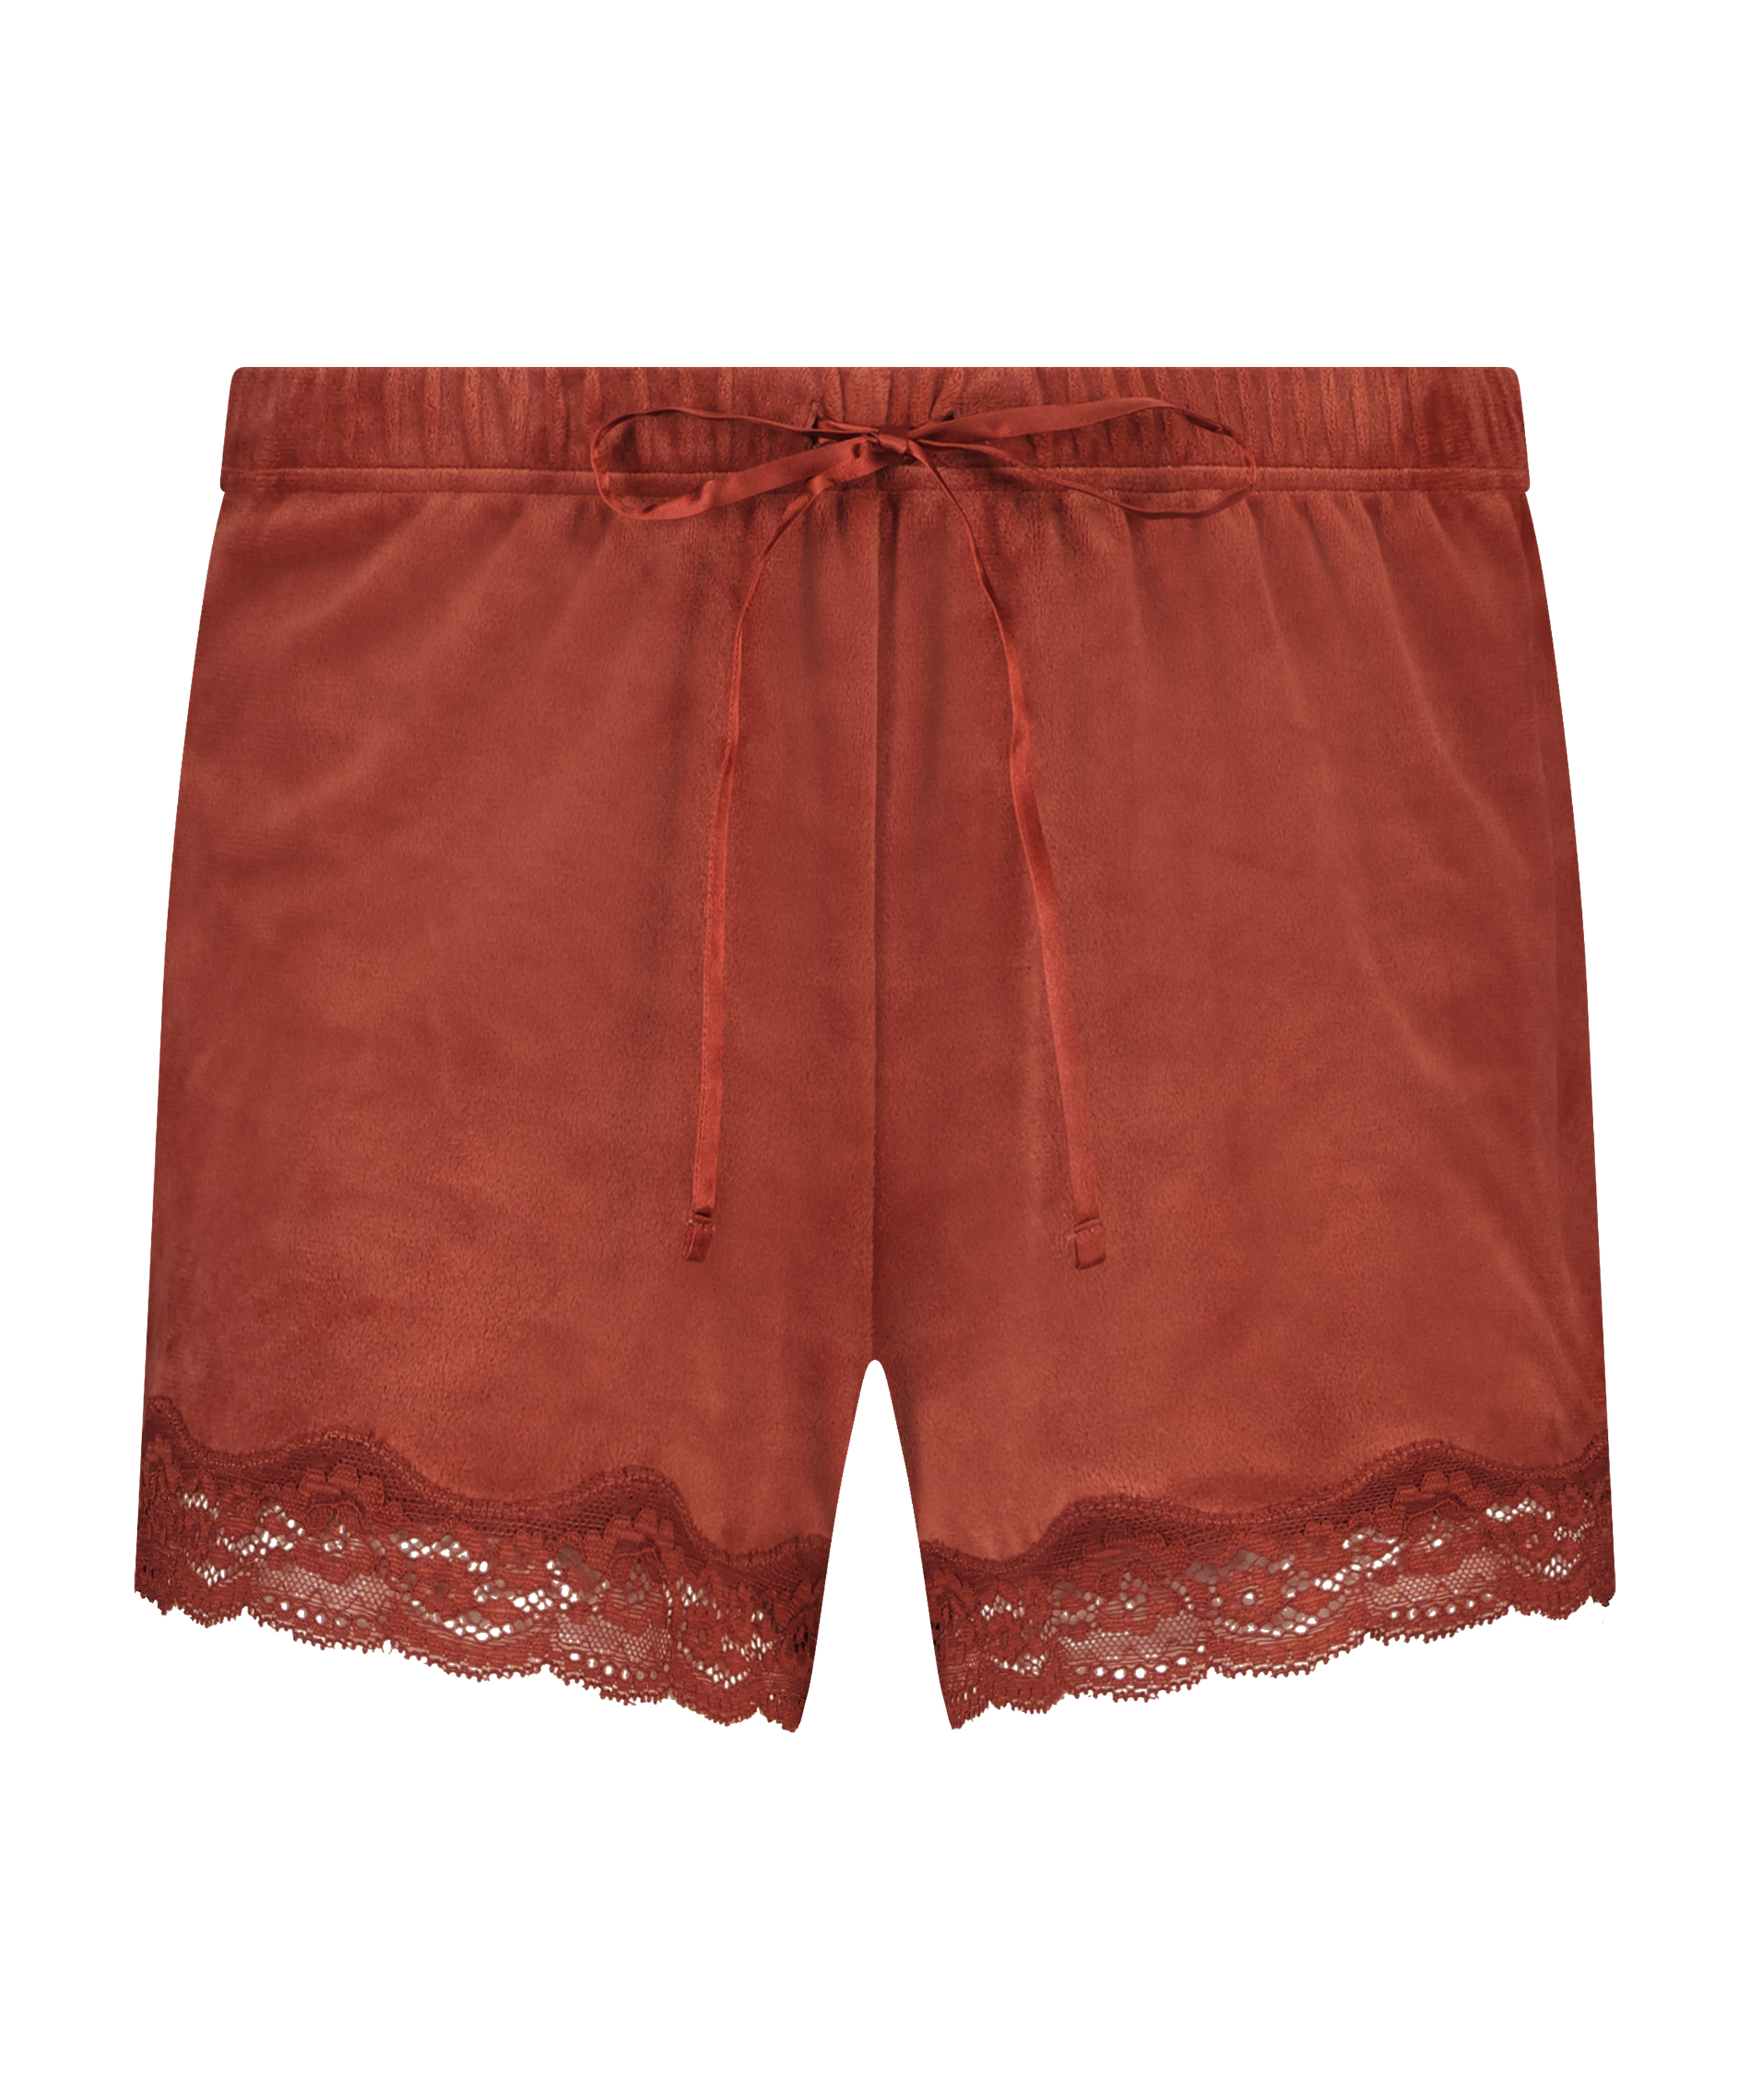 Velvet lace shorts, Red, main